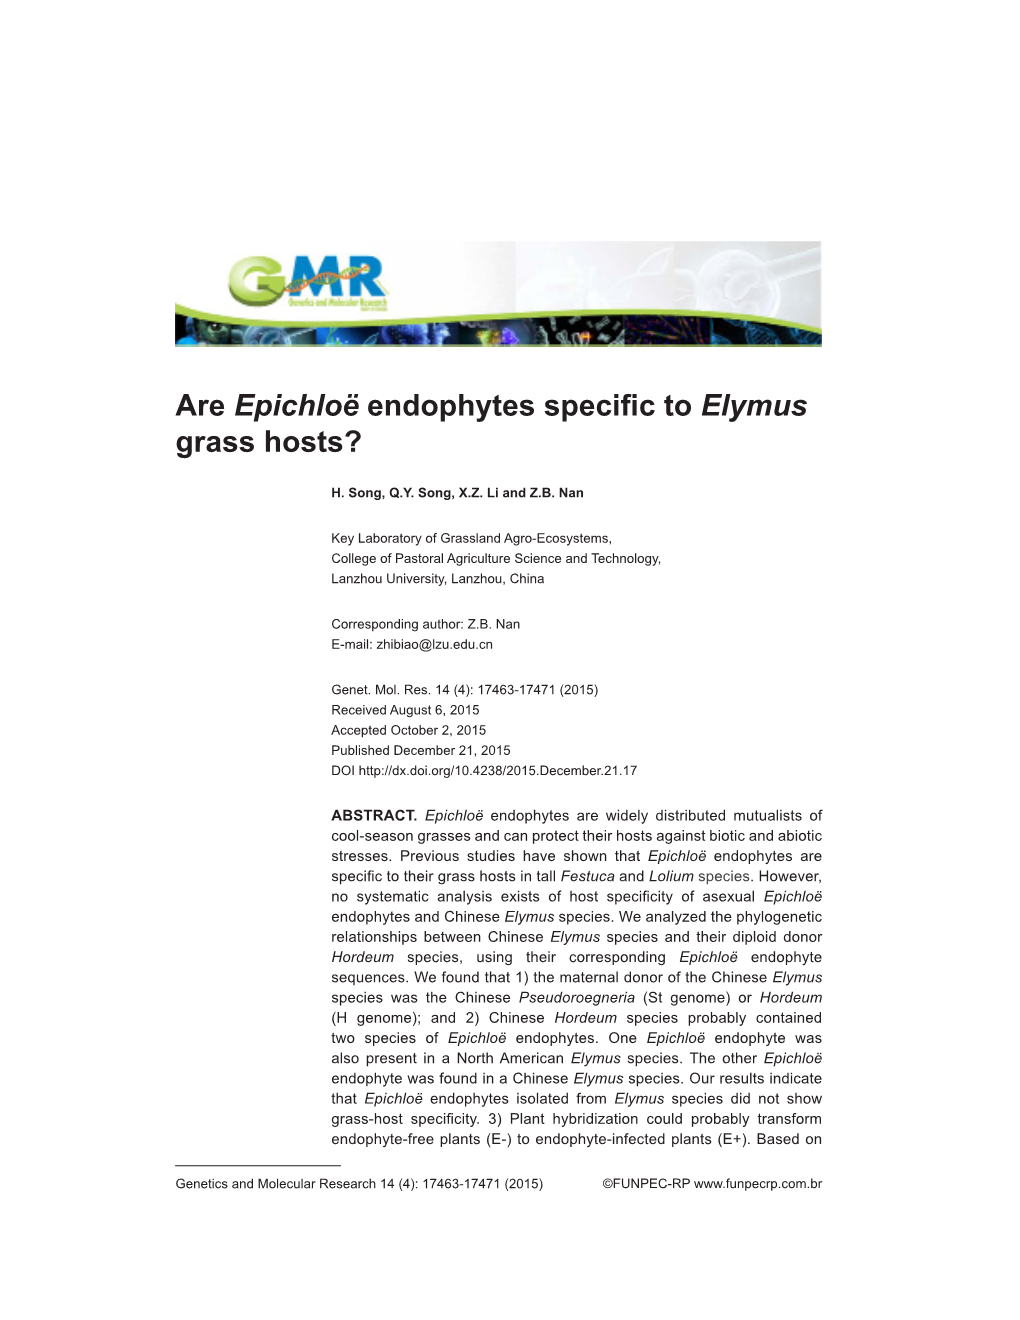 Are Epichloë Endophytes Specific to Elymus Grass Hosts?